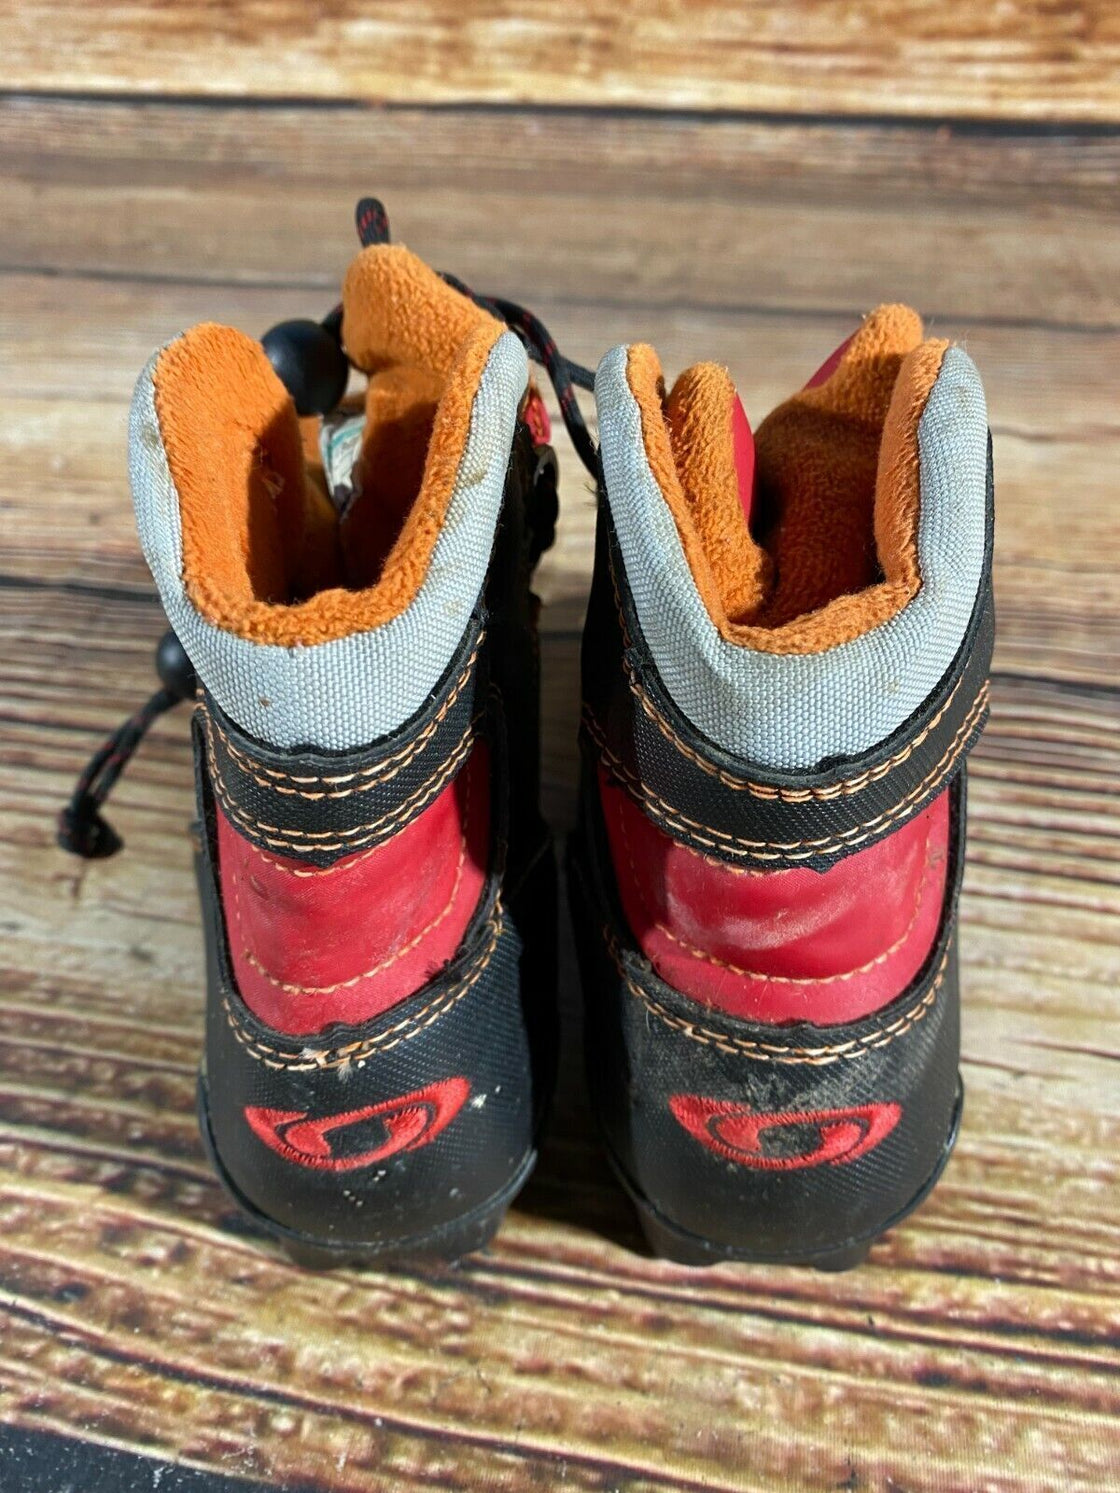 SALOMON Kids Nordic Cross Country Ski Boots Size EU30 1/2 US10.5 SNS S-36